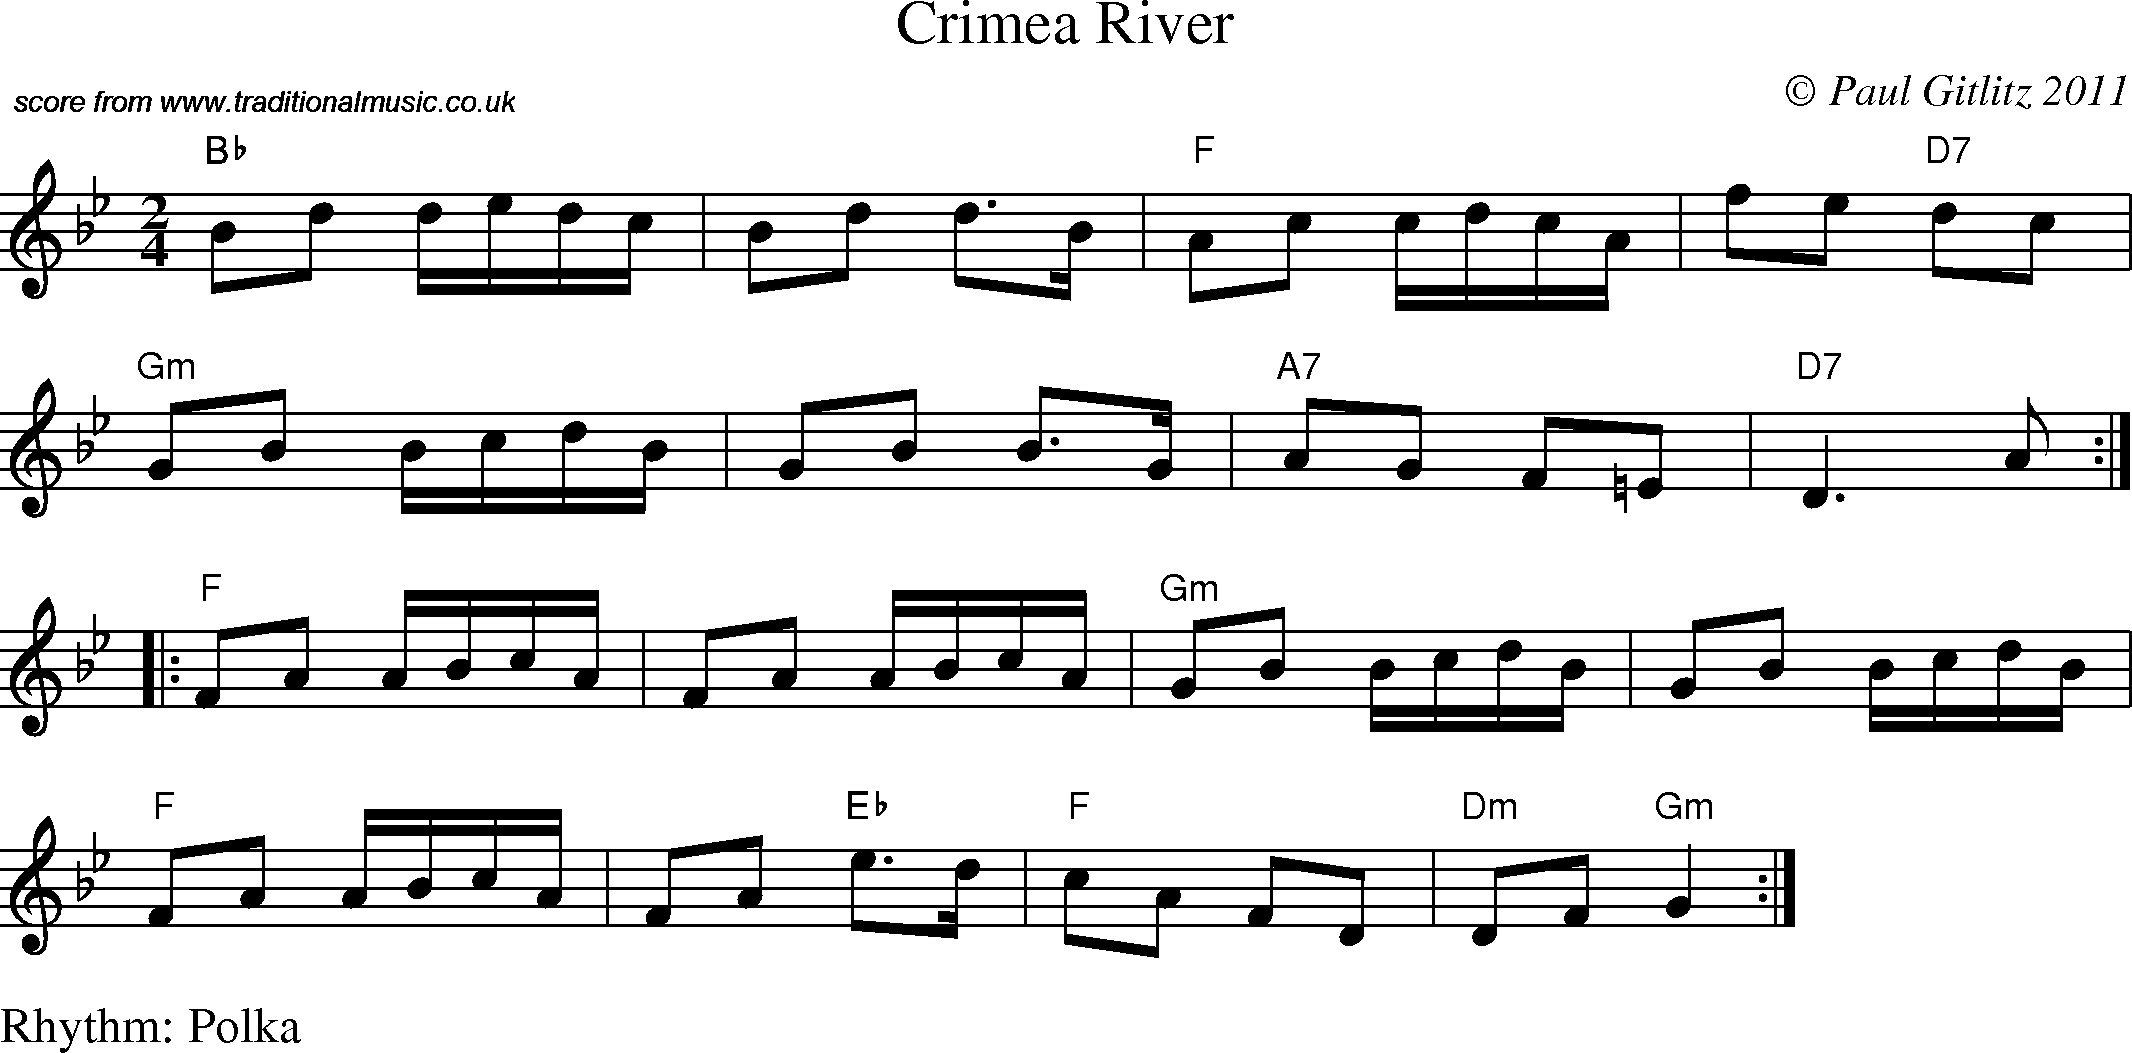 Sheet Music Score for Polka - Crimea River